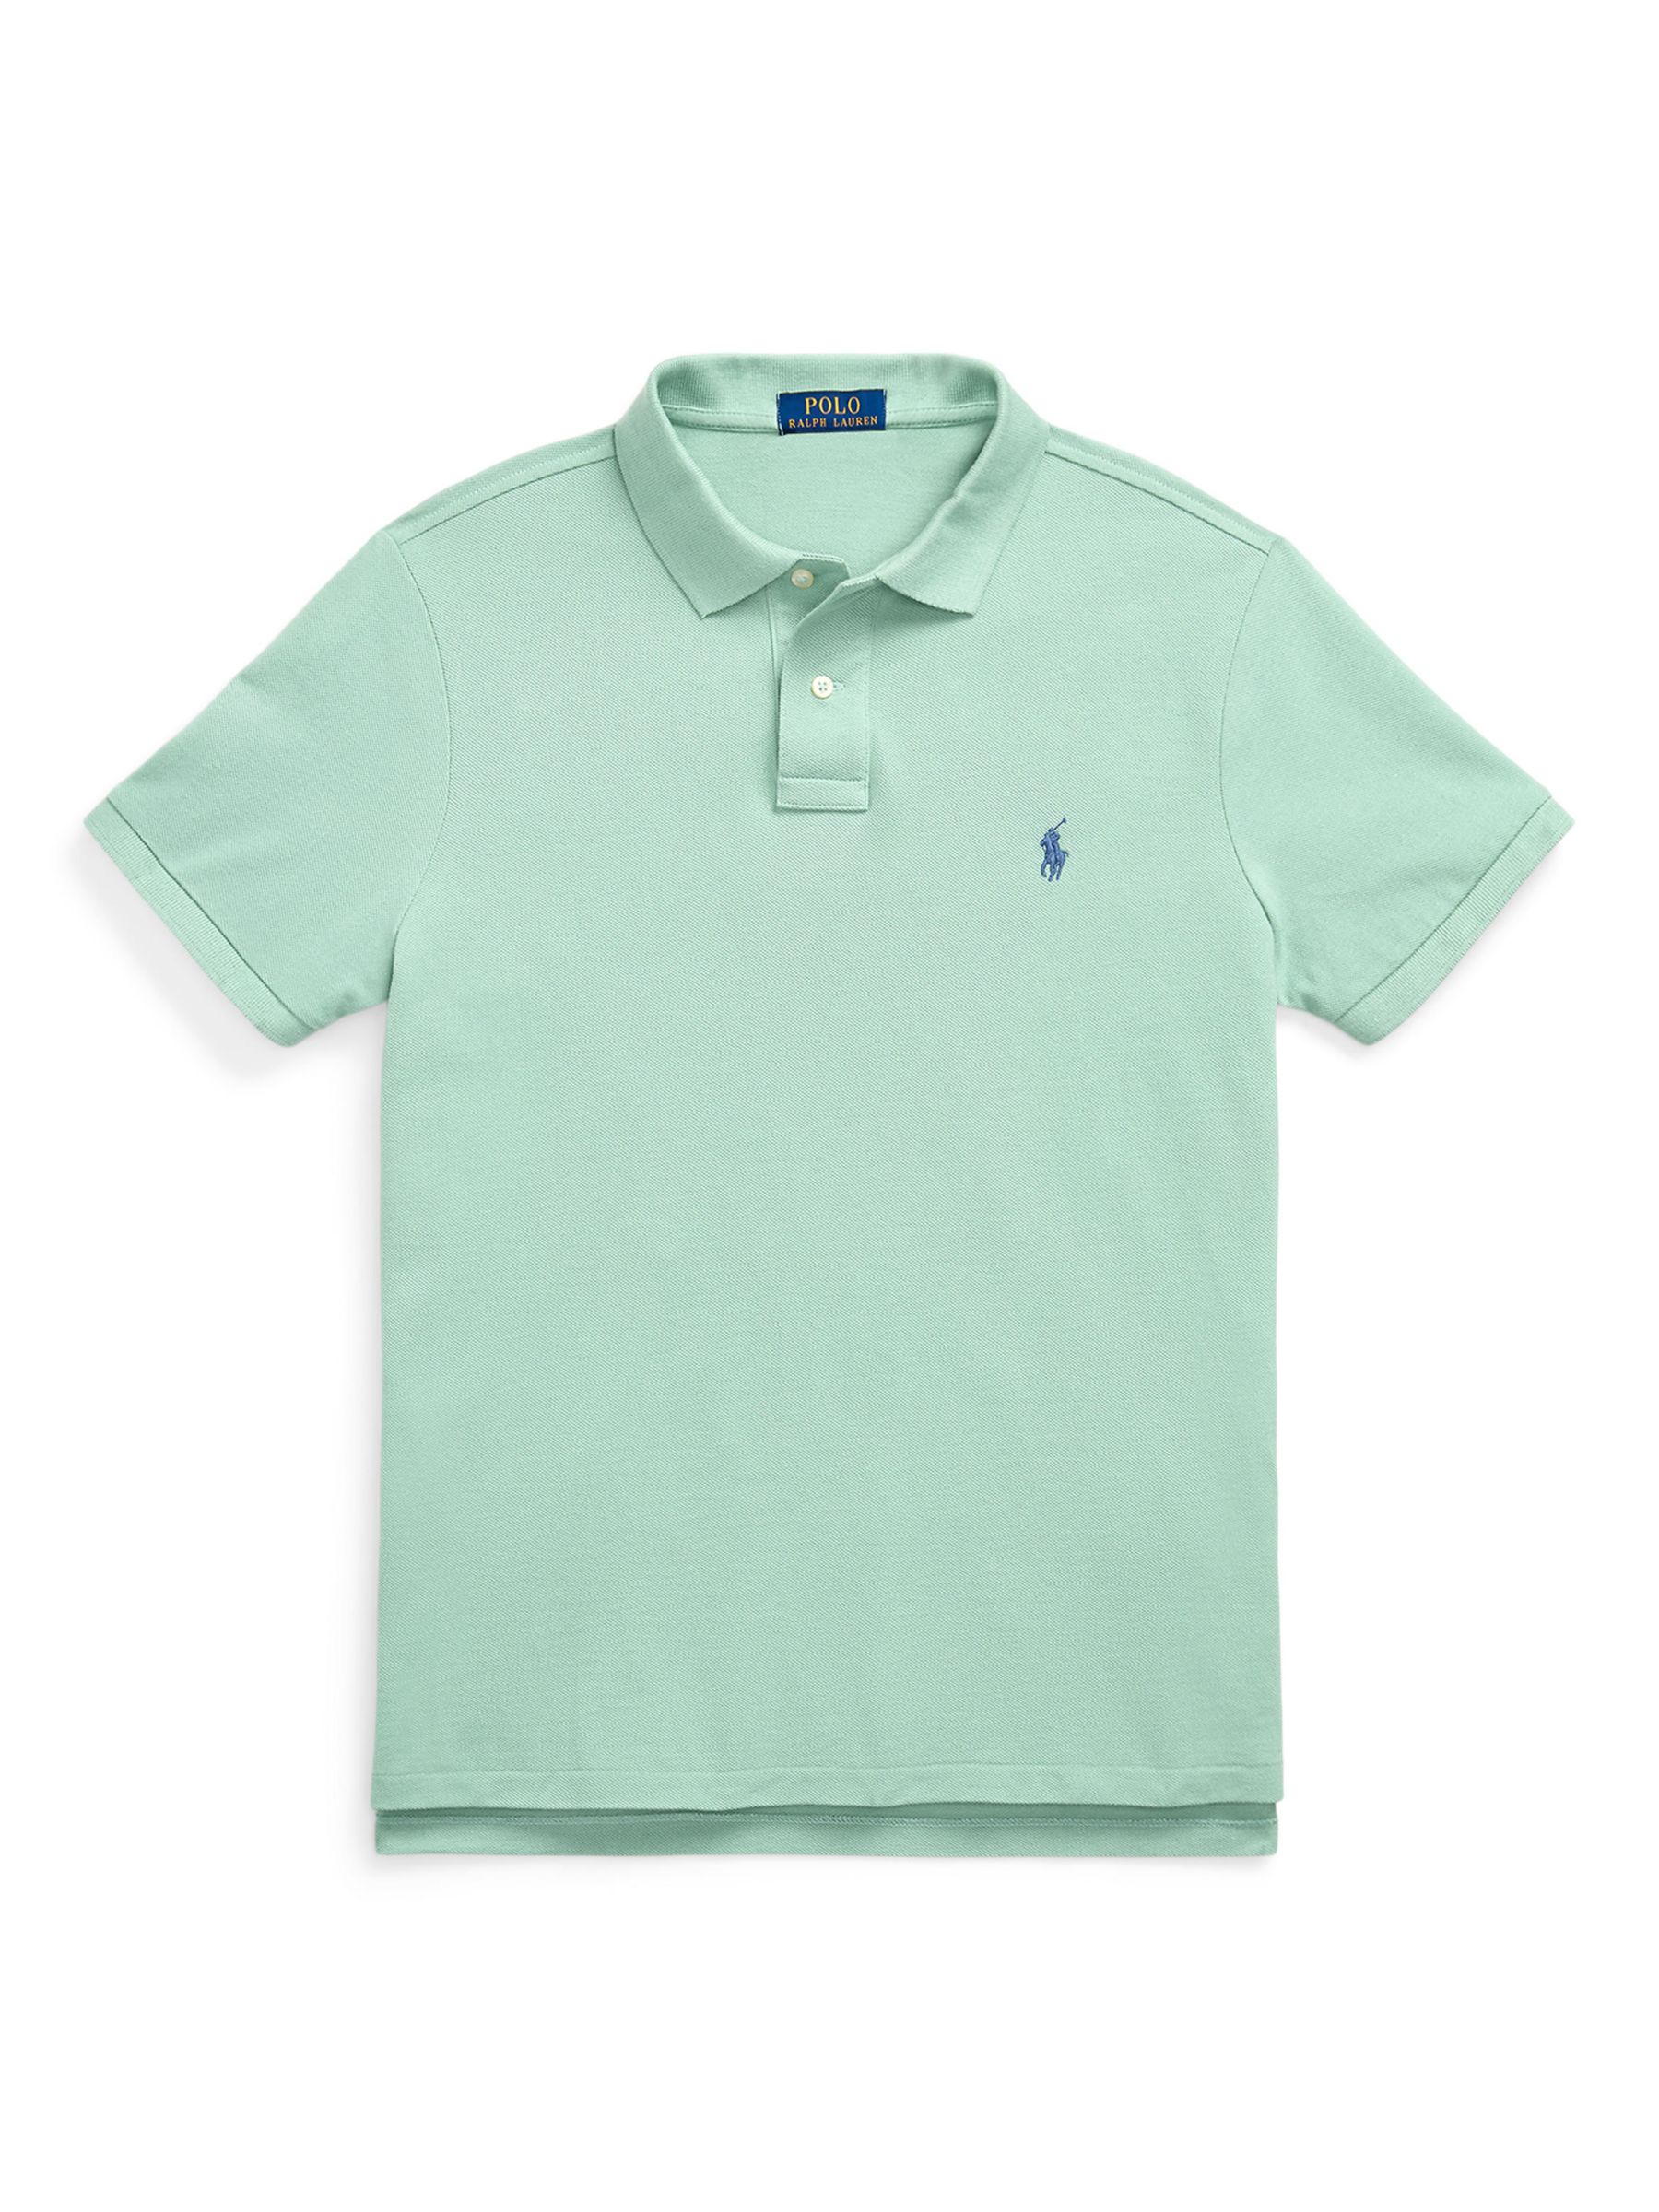 Ralph Lauren American Style Standard Polo Shirt, Faded Mint, S